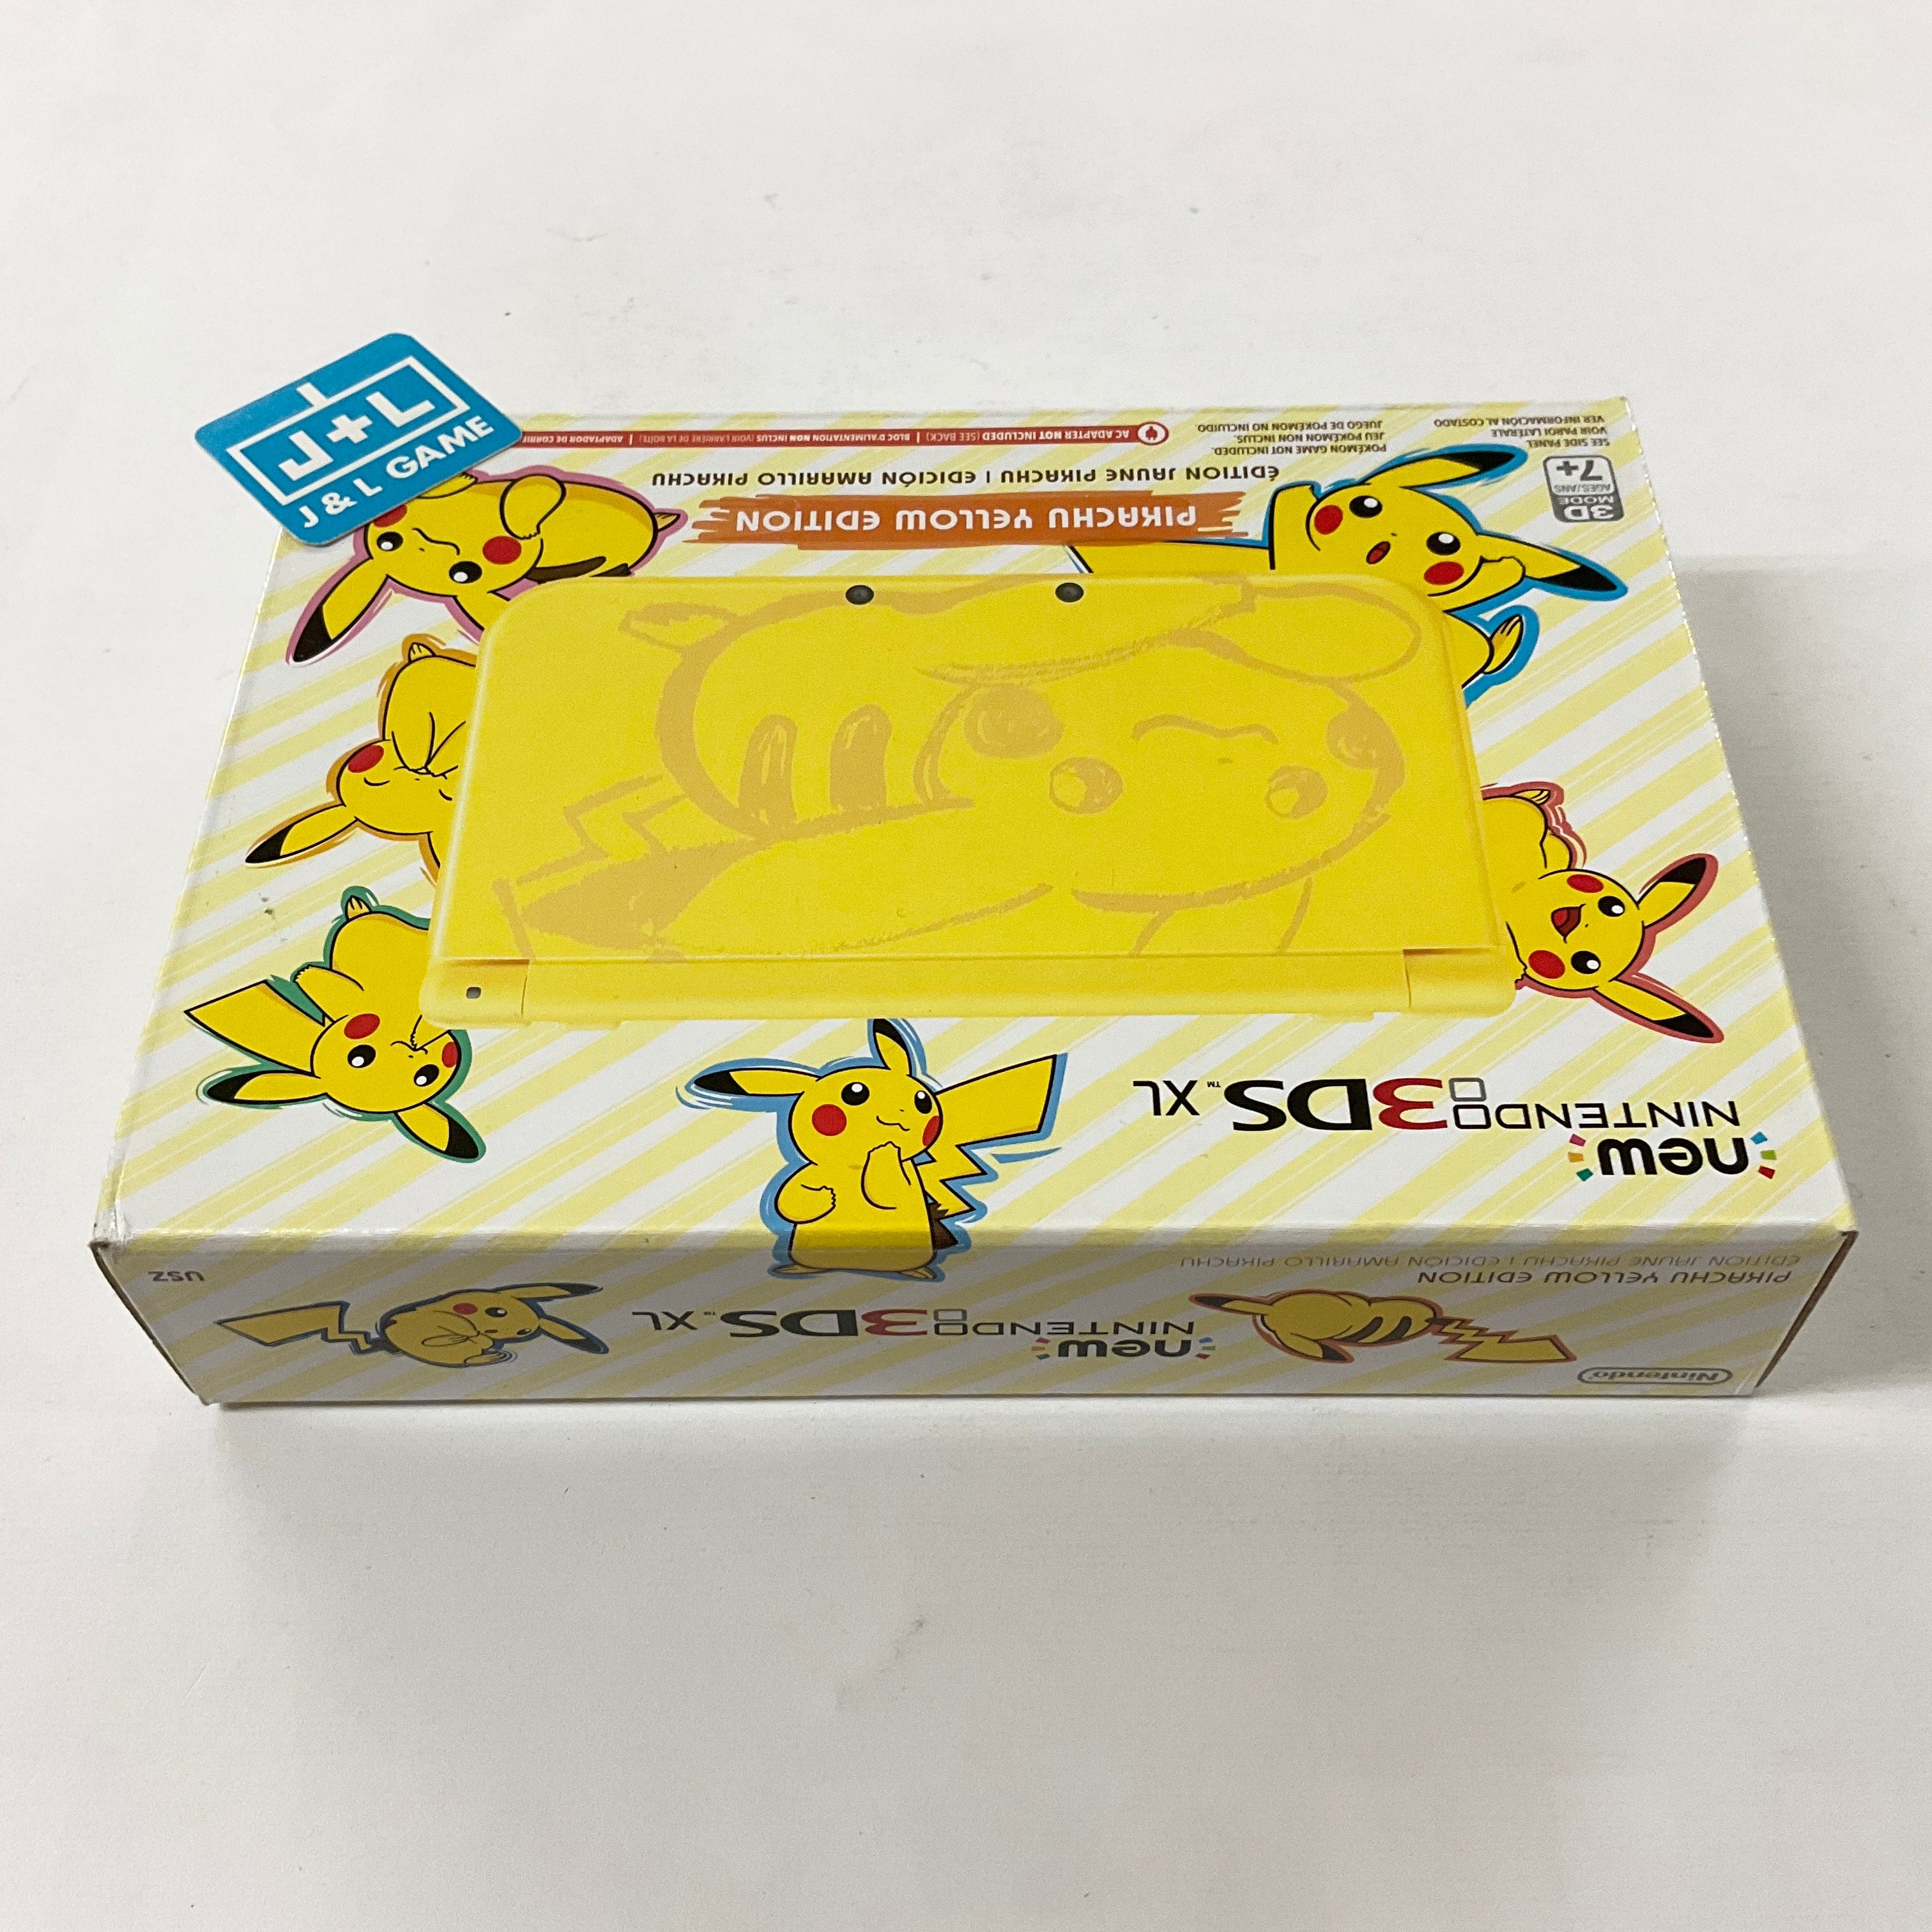 Nintendo New 3DS XL Console (Pikachu Yellow Edition) - Nintendo 3DS Consoles Nintendo   